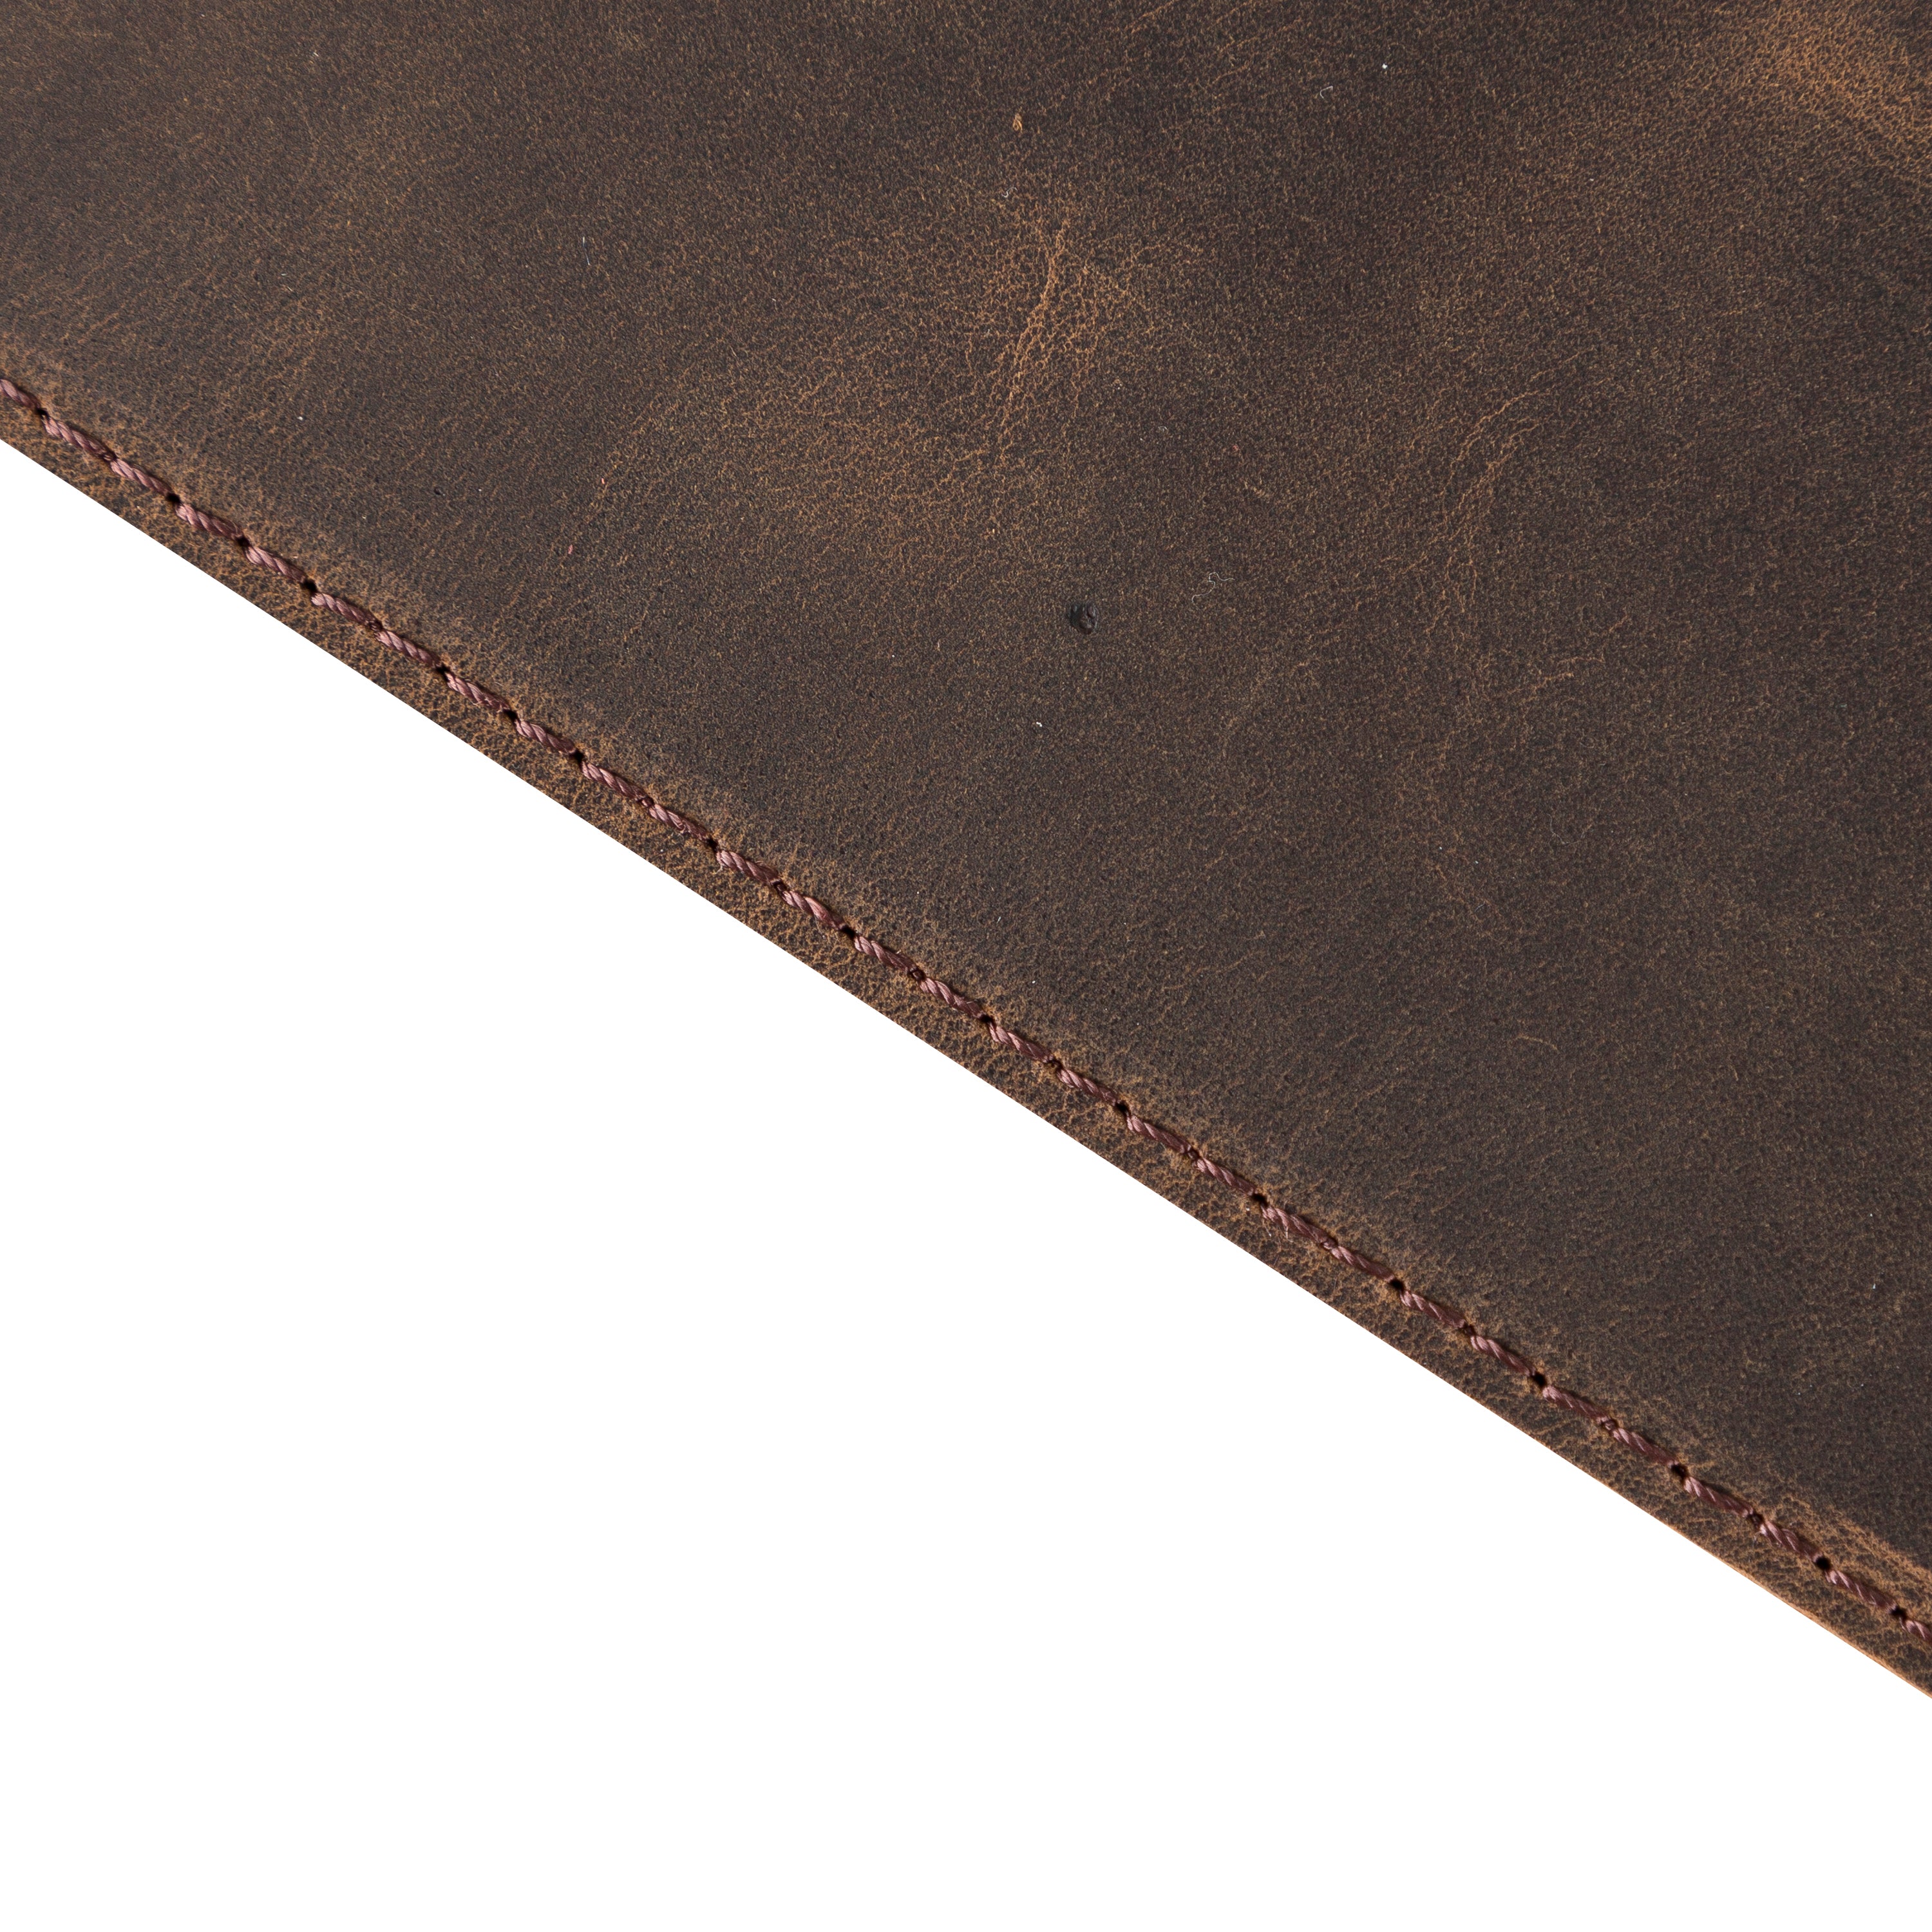 DelfiCase Genuine Dark Brown Leather Deskmat, Computer Pad, Office Desk Pad 6